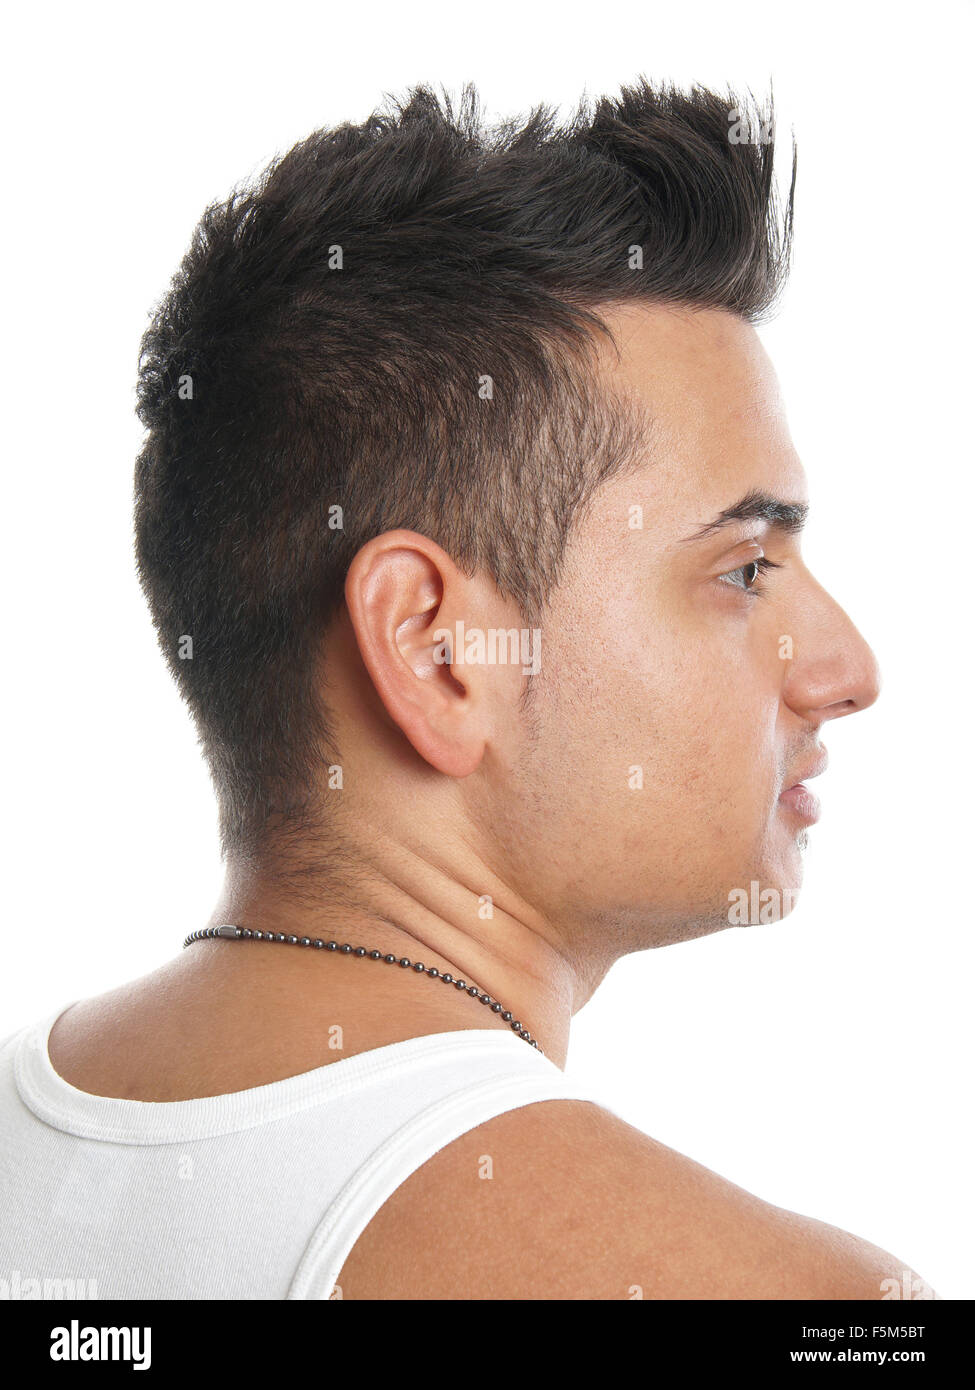 man with spiky hair Stock Photo